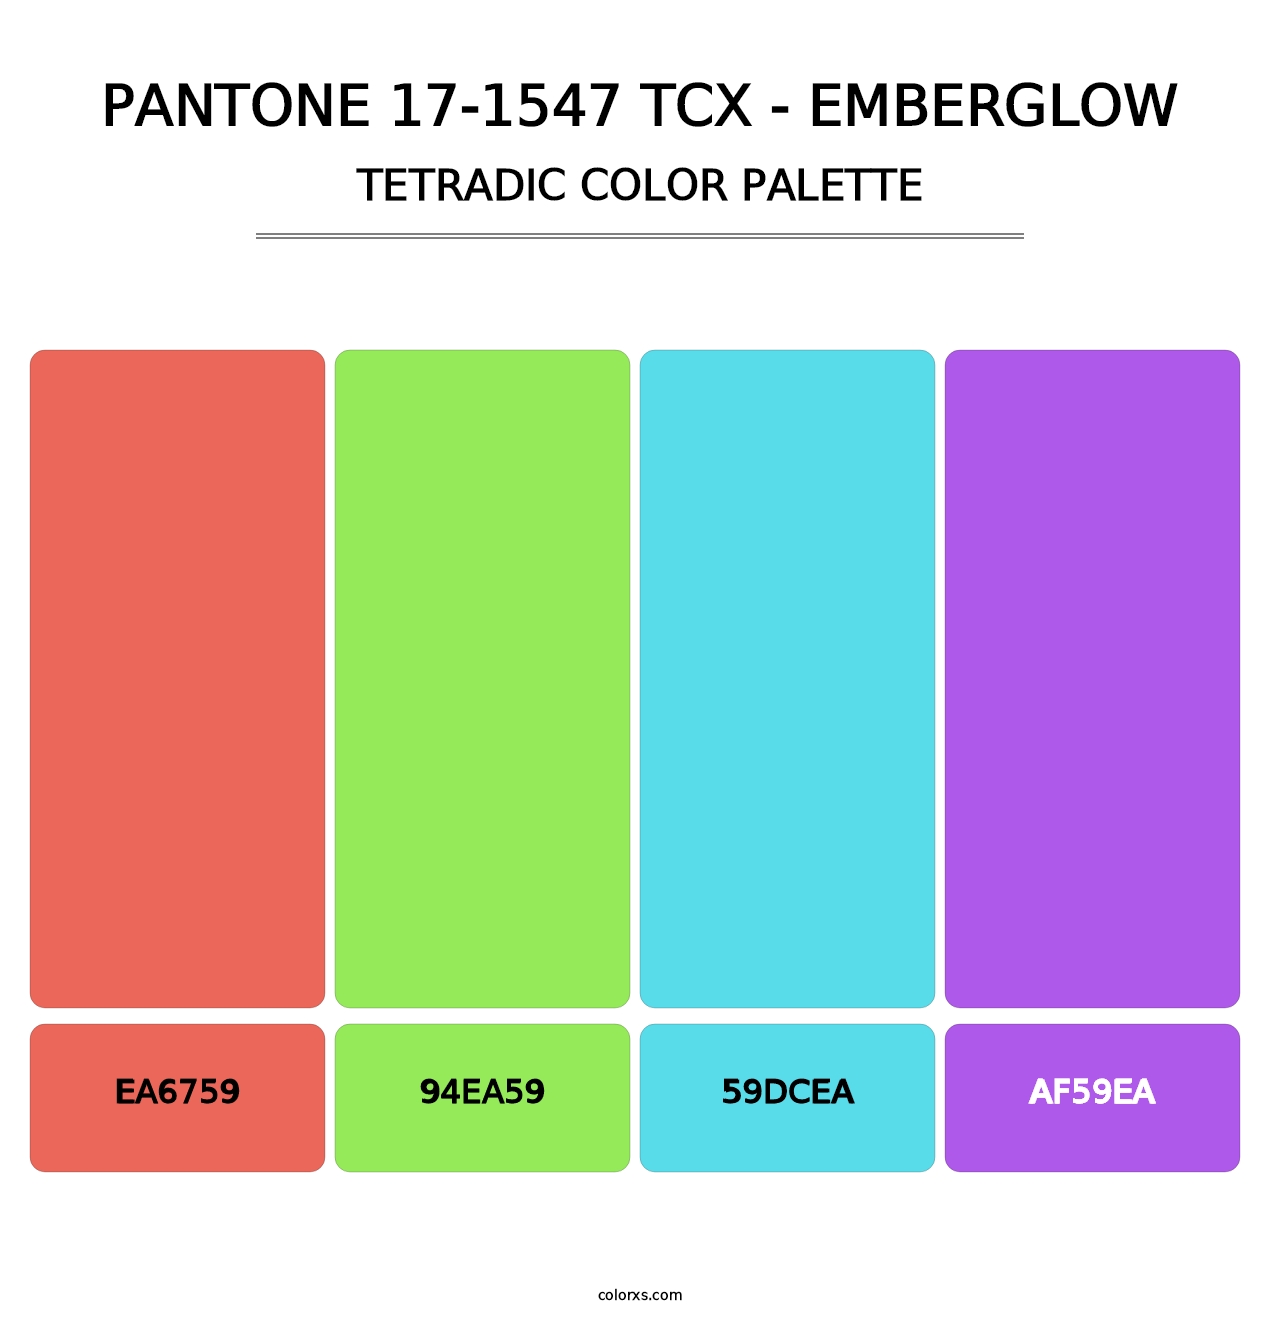 PANTONE 17-1547 TCX - Emberglow - Tetradic Color Palette